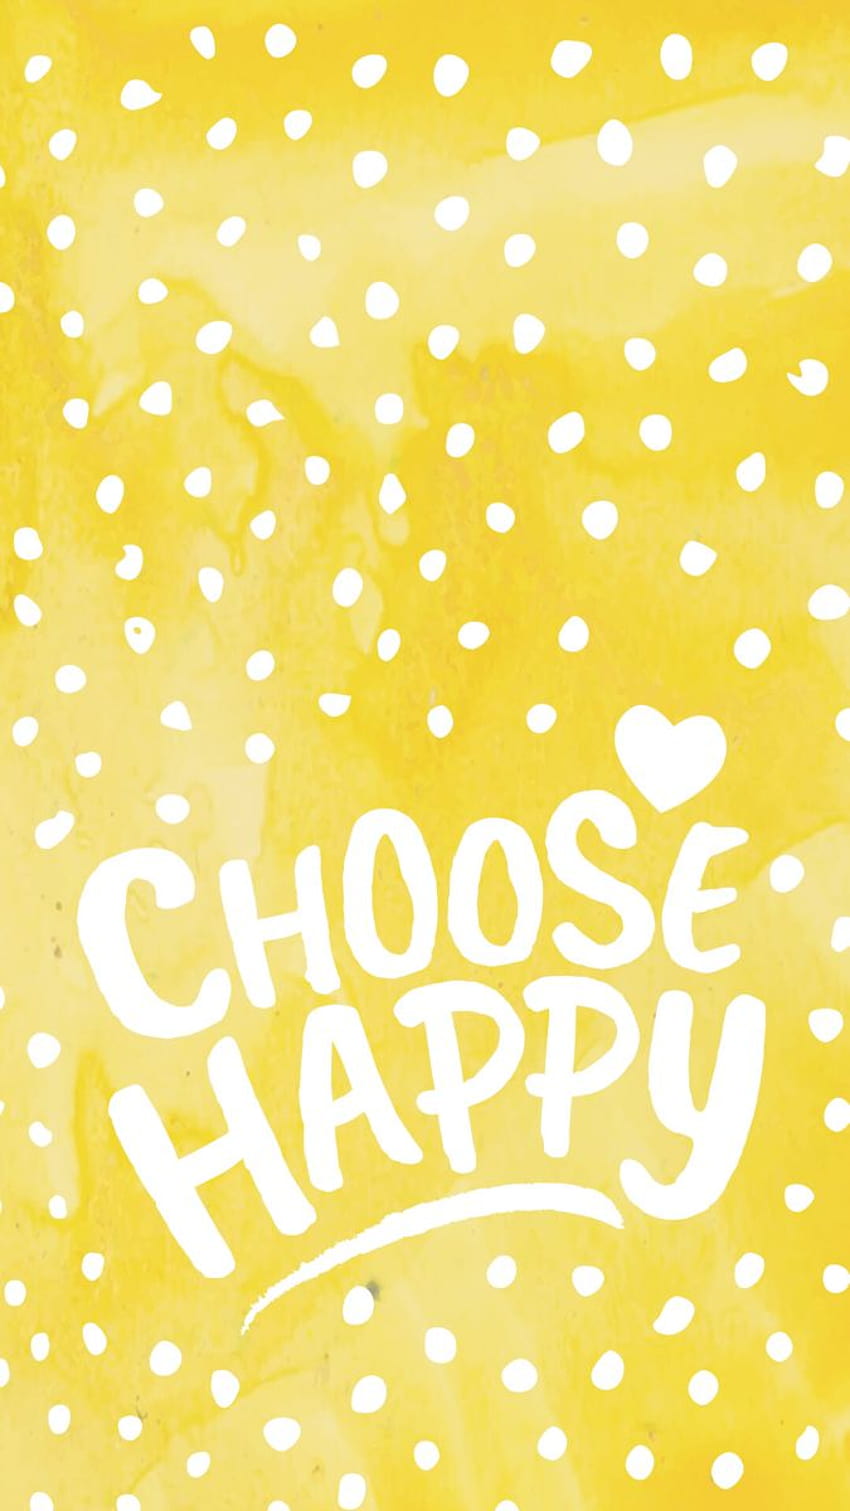 Pilih Happy Inspirational iPhone Yellow Aesthetic iPhone Inspiring, kuning pilih happy wallpaper ponsel HD